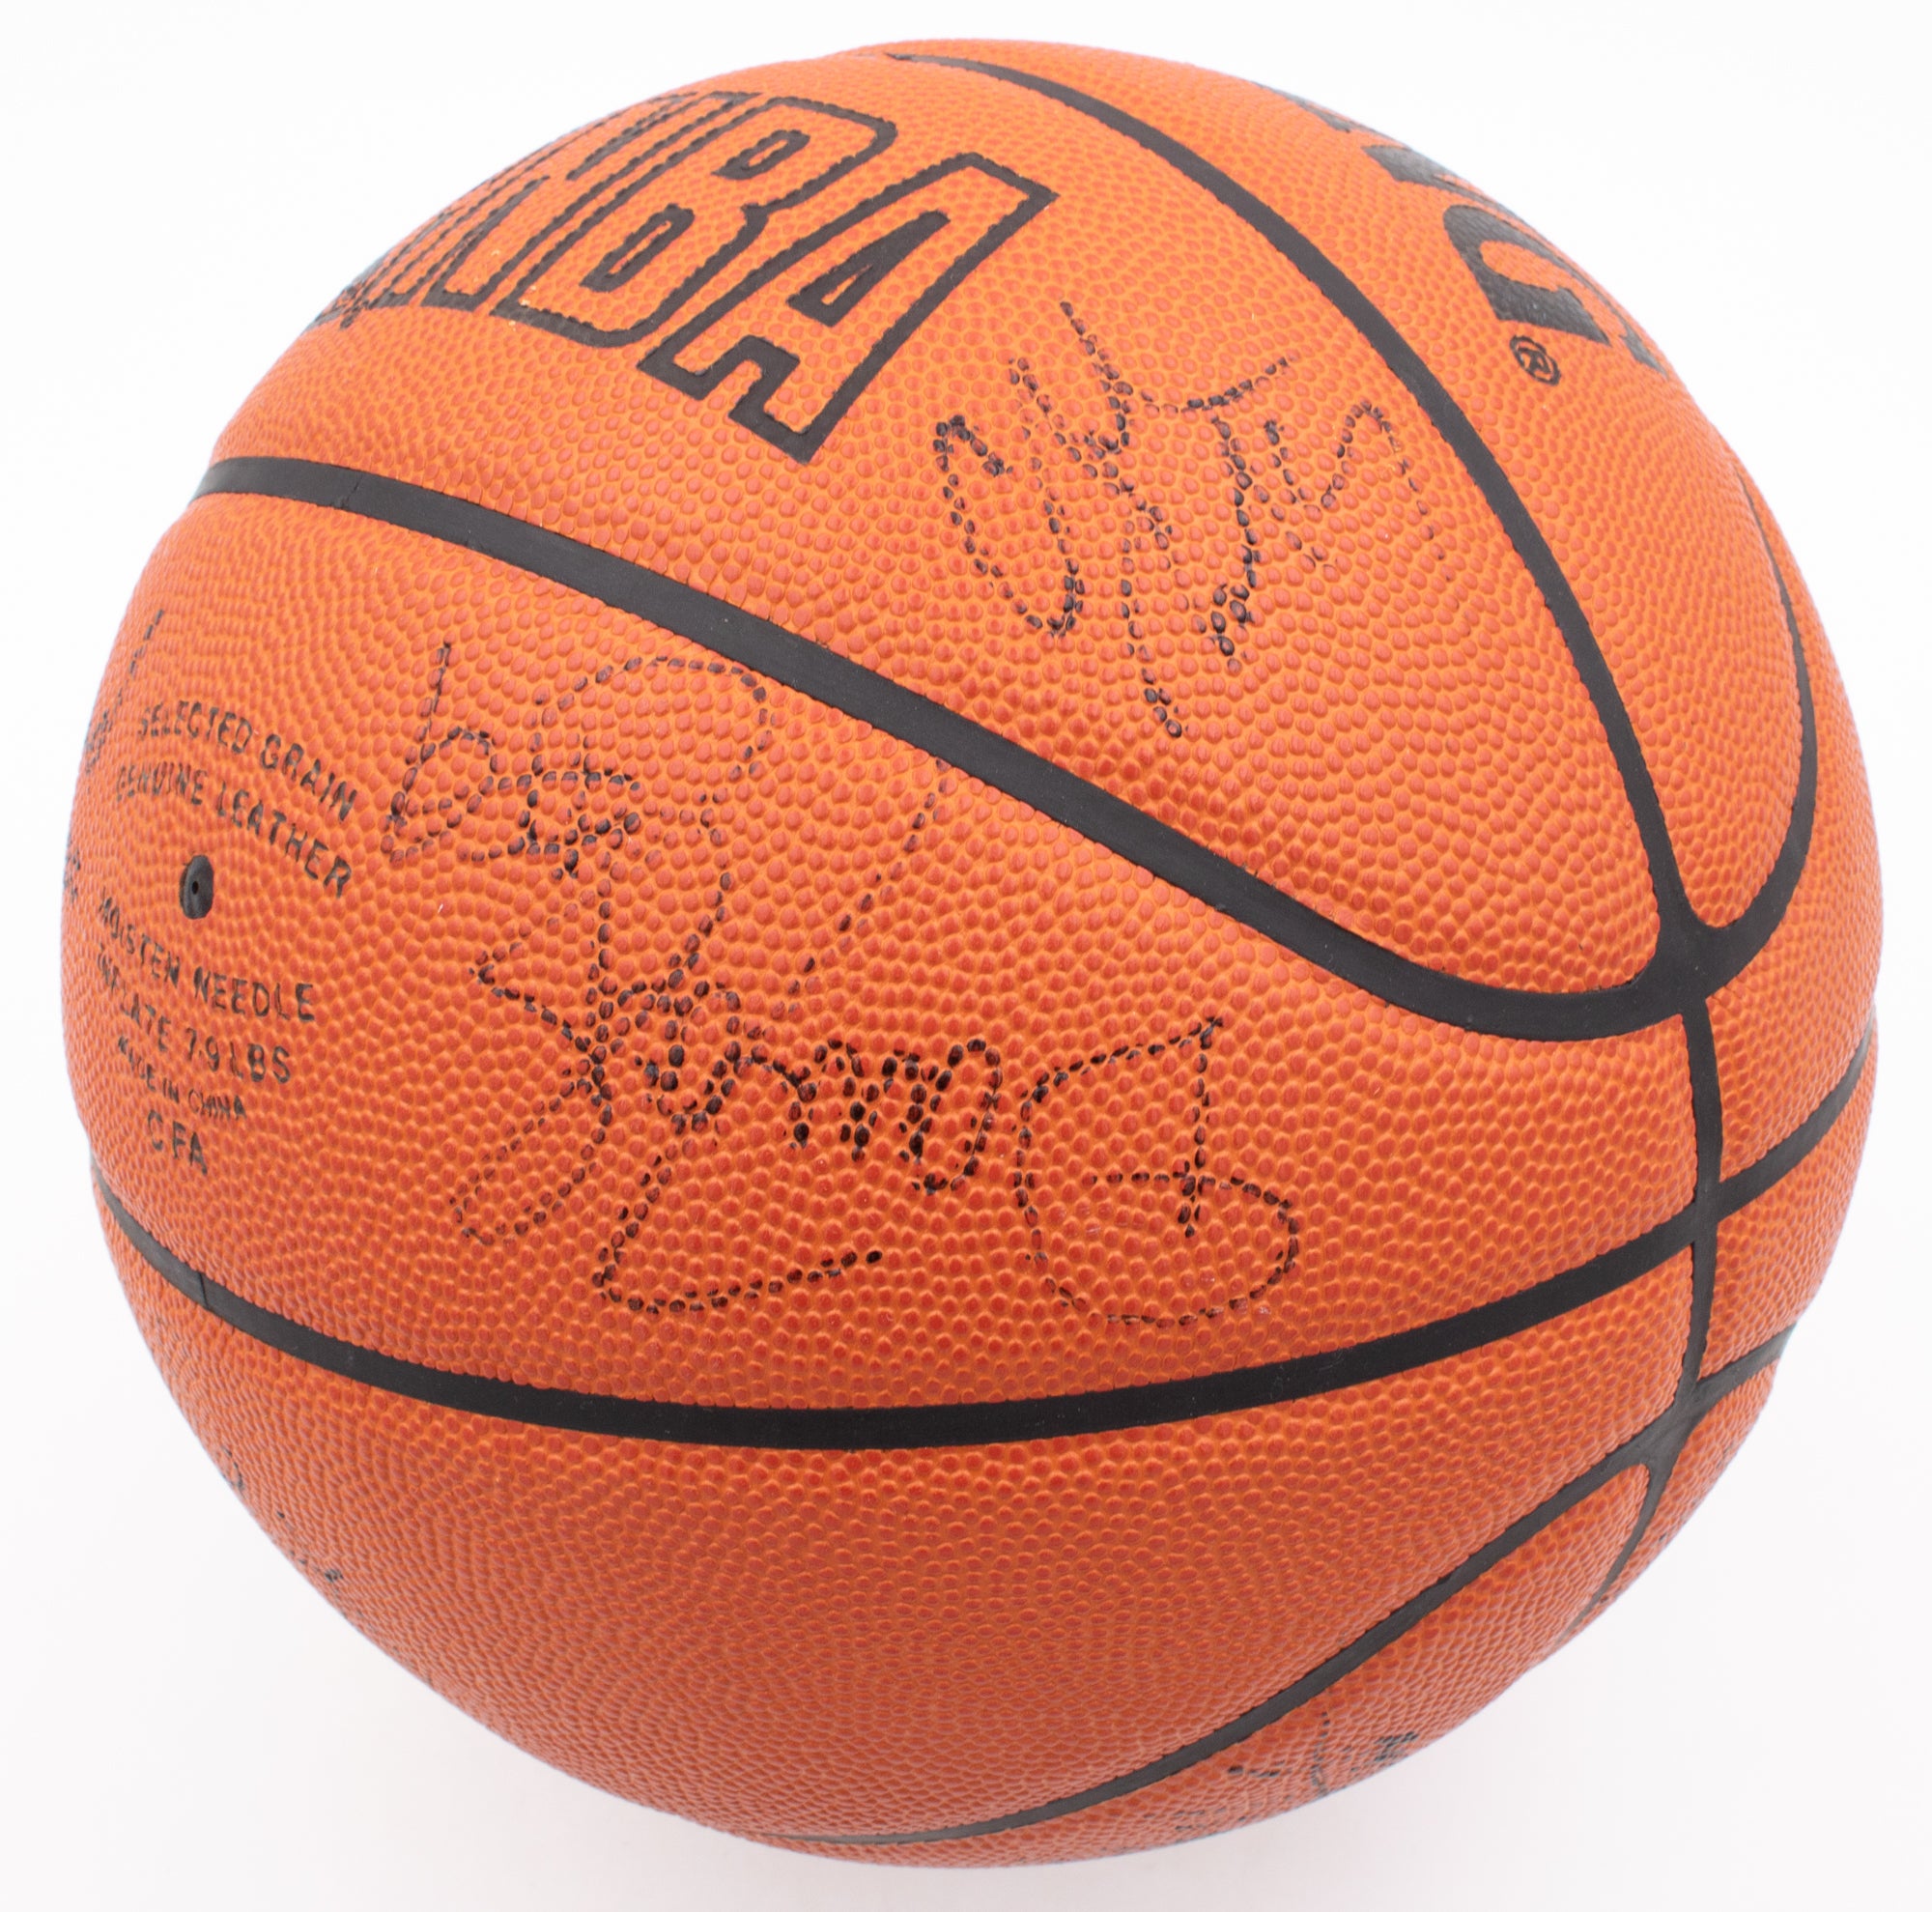 1992/93 Phoenix Suns (Western Conference Champions!) Team Signed Basketball BAS LOA